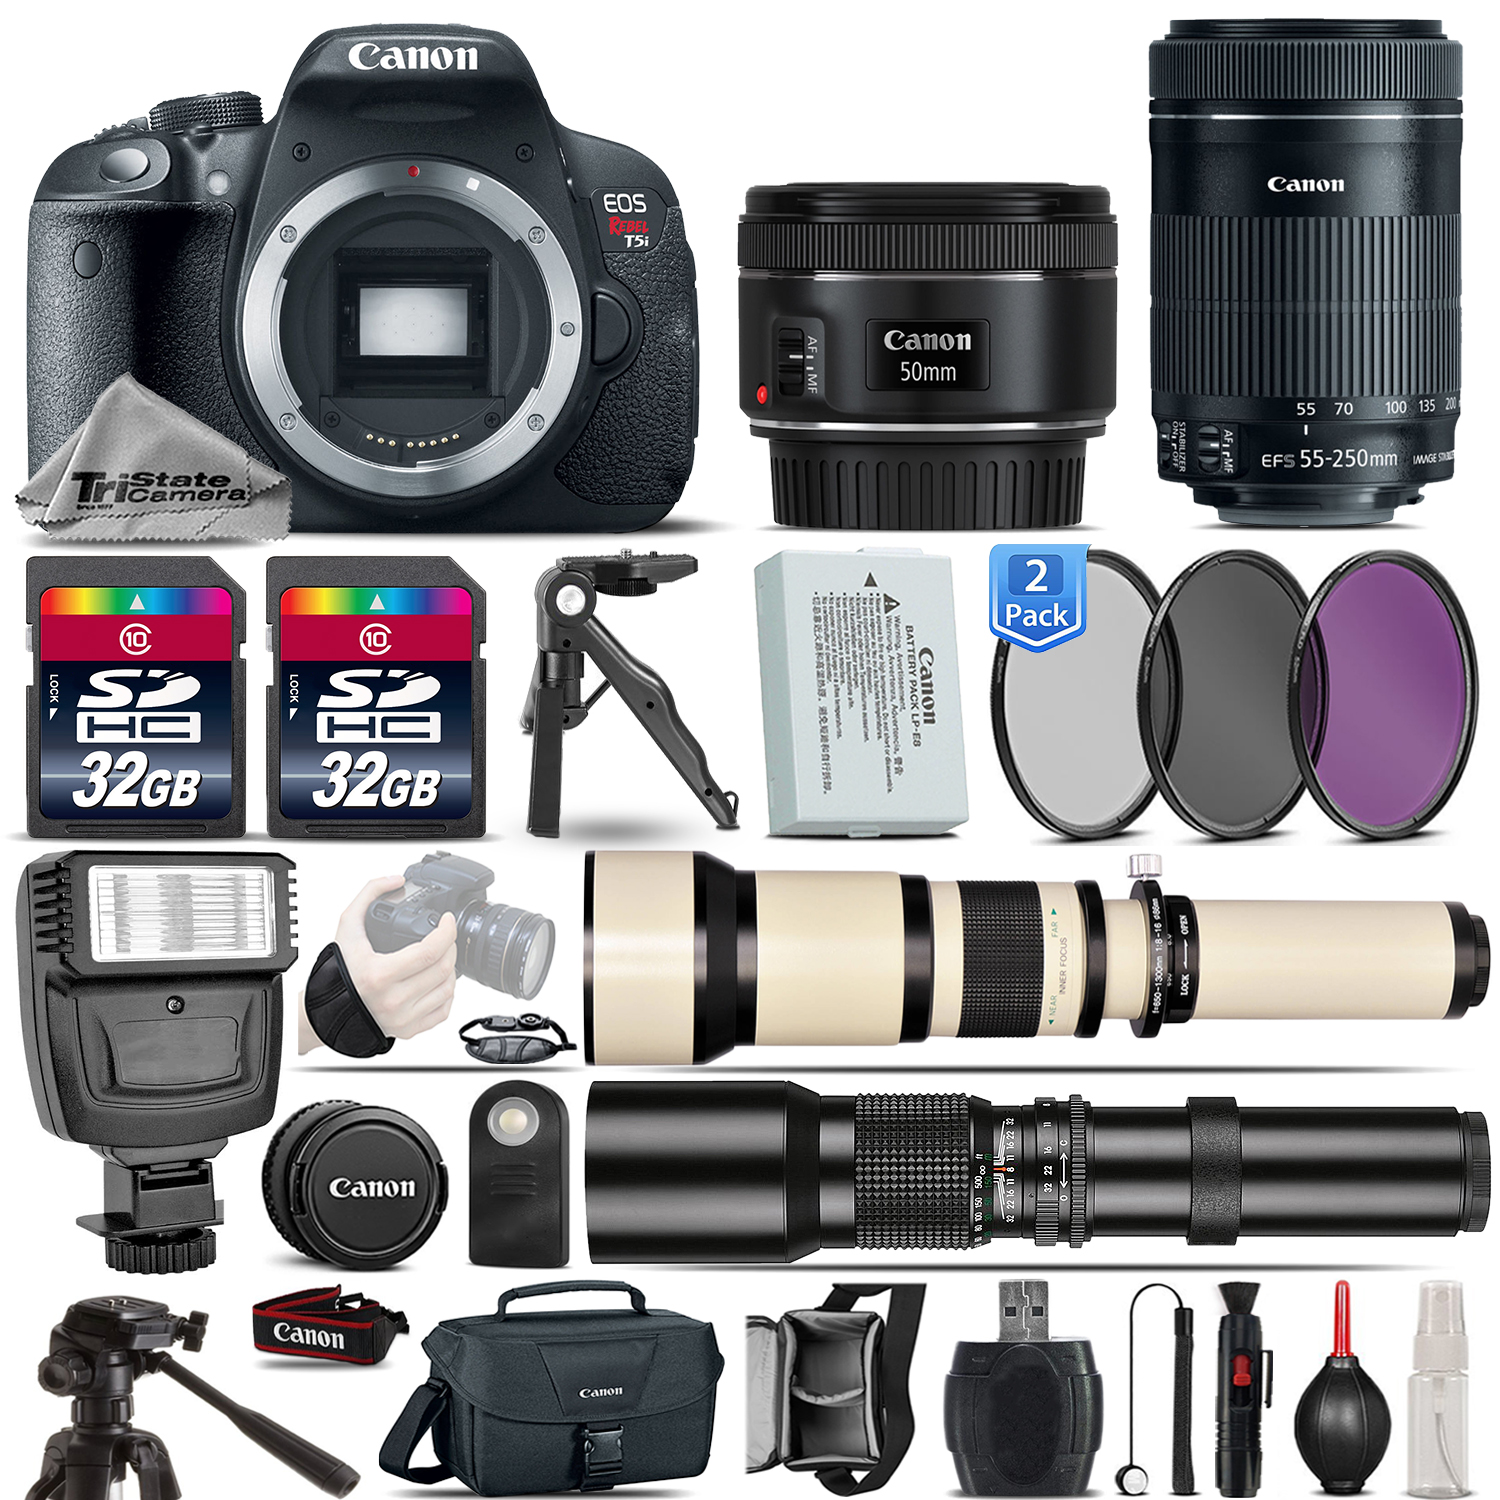 EOS Rebel T5i 700D SLR Camera + 50mm 1.8 + 55-250mm  STM Lens - 64GB Kit *FREE SHIPPING*